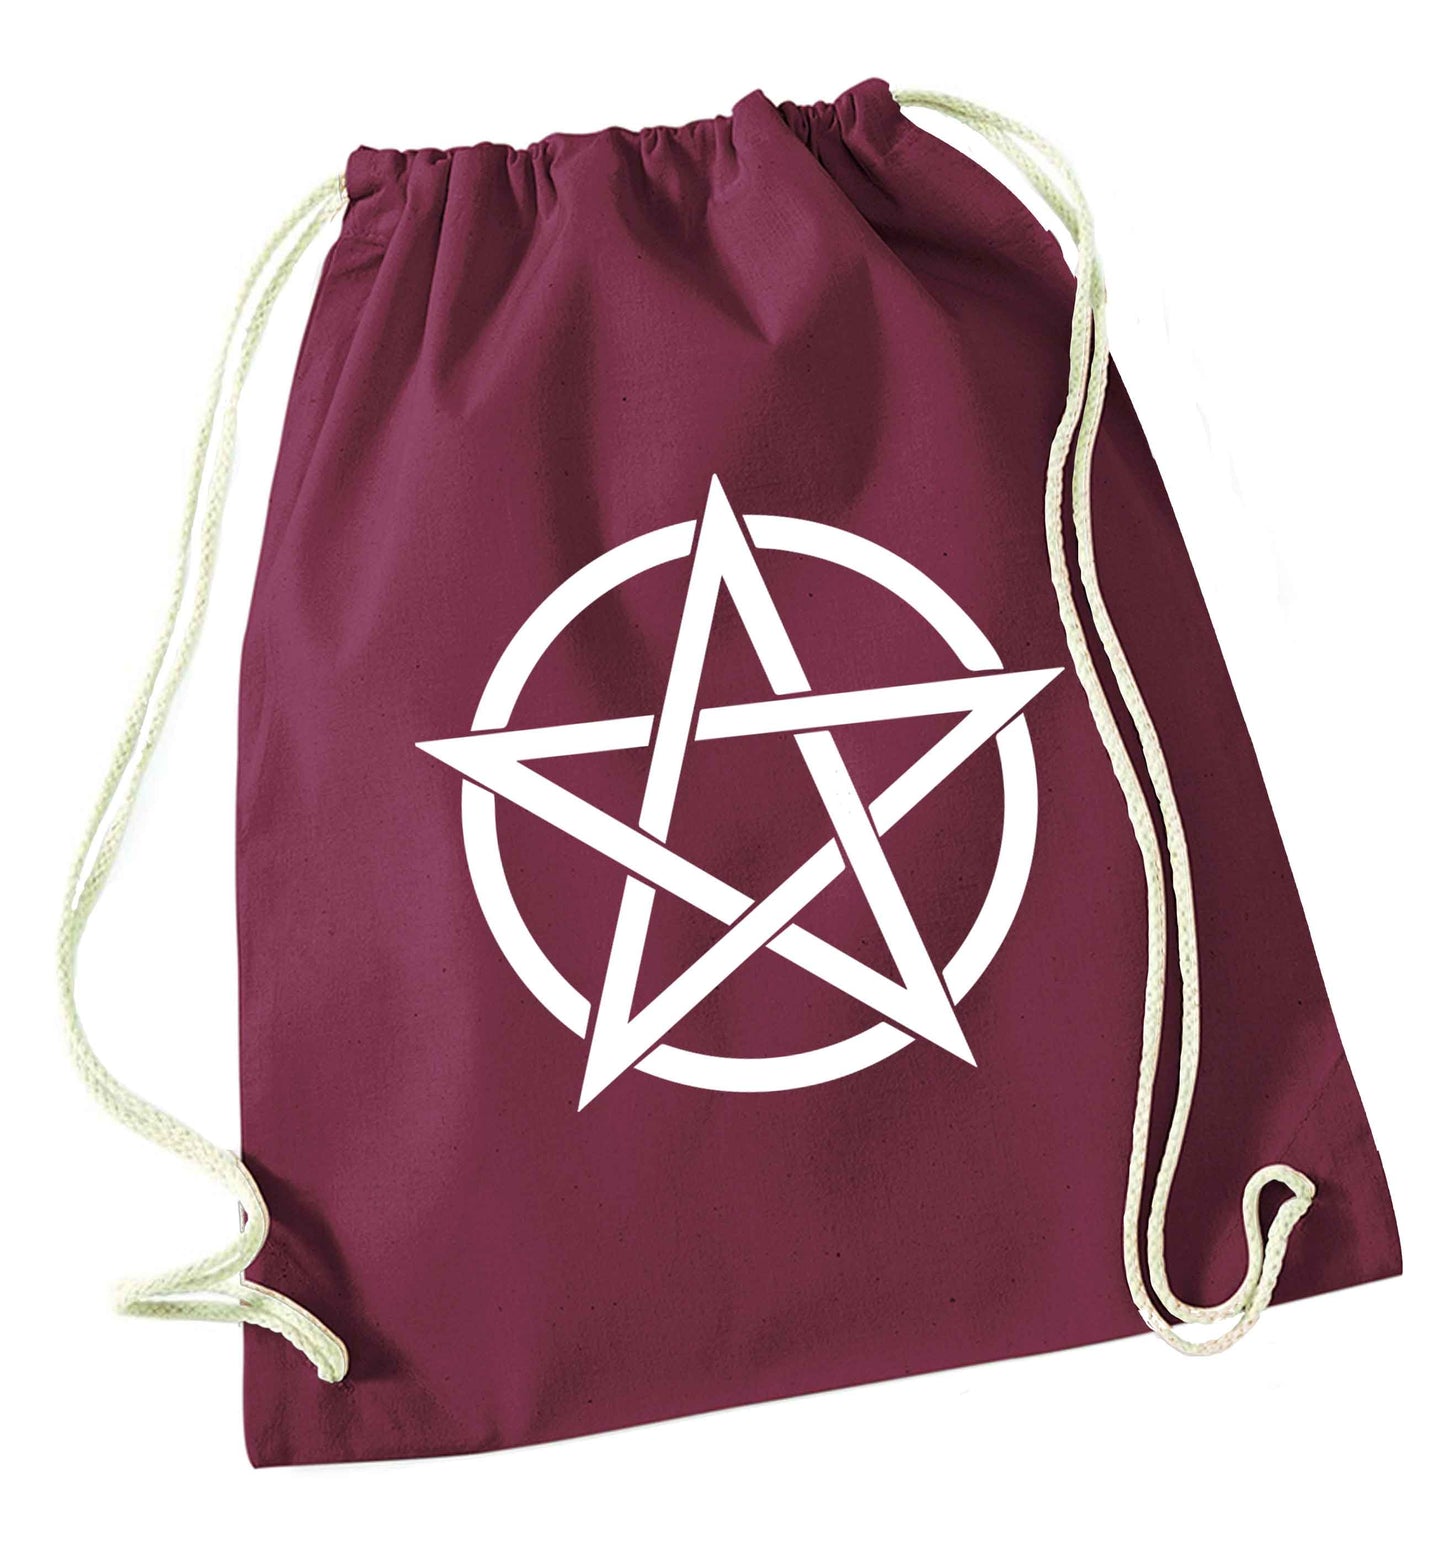 Pentagram symbol maroon drawstring bag